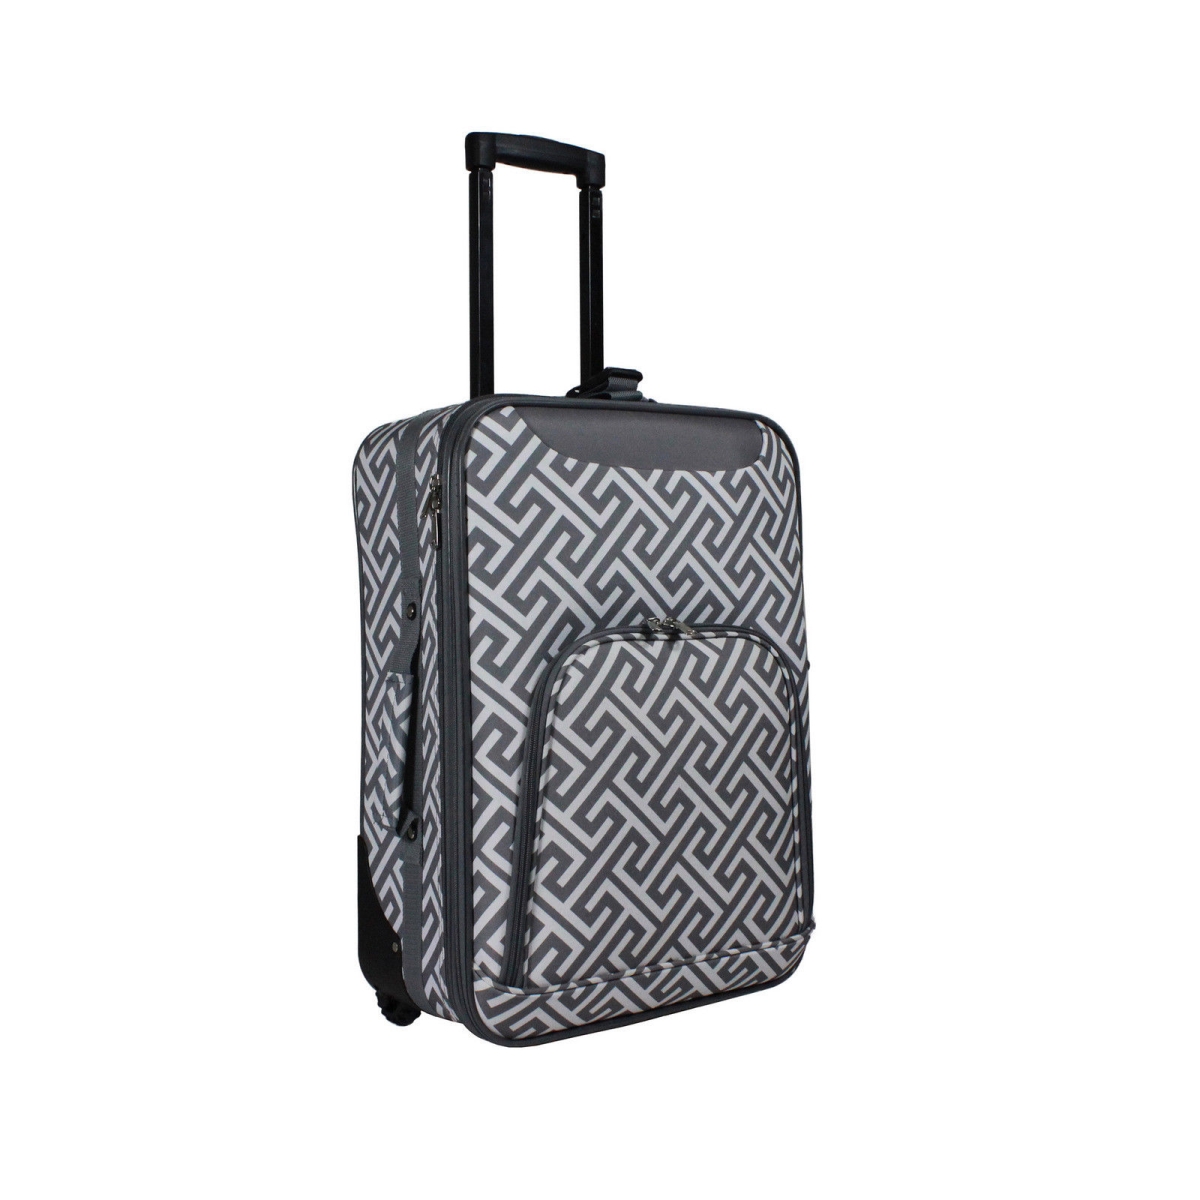 816701-185grey-w 20 In. Lightweight Carry-on Rolling Suitcase - Grey & White Greek Key